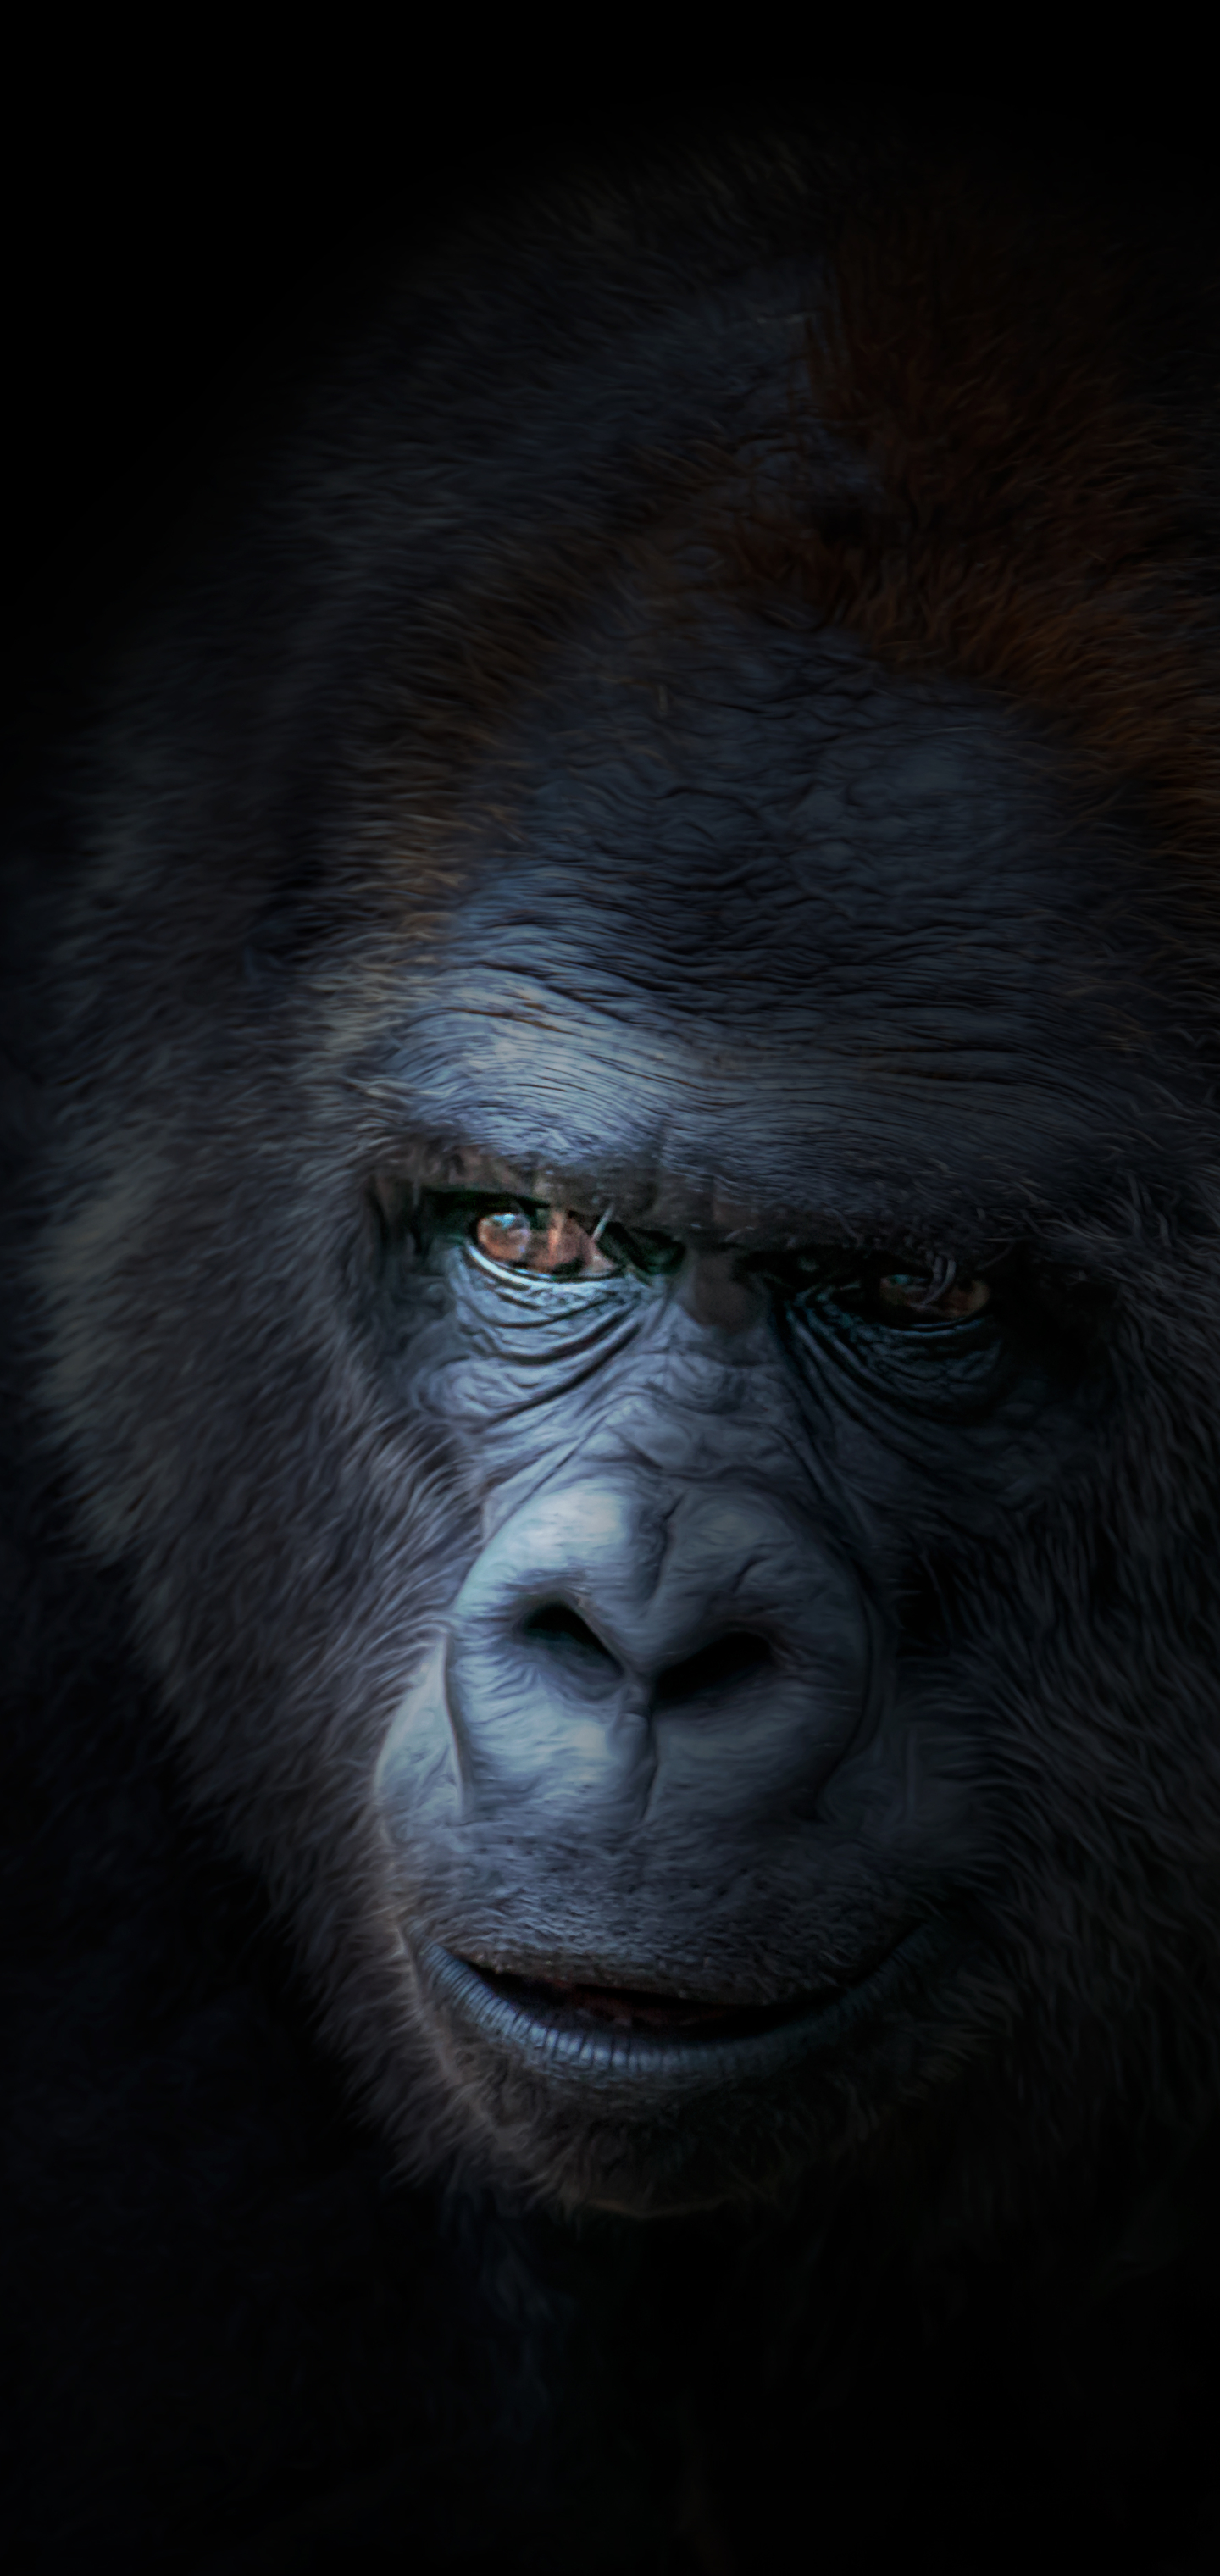 Gorilla Phone Wallpaper by Chris Frank